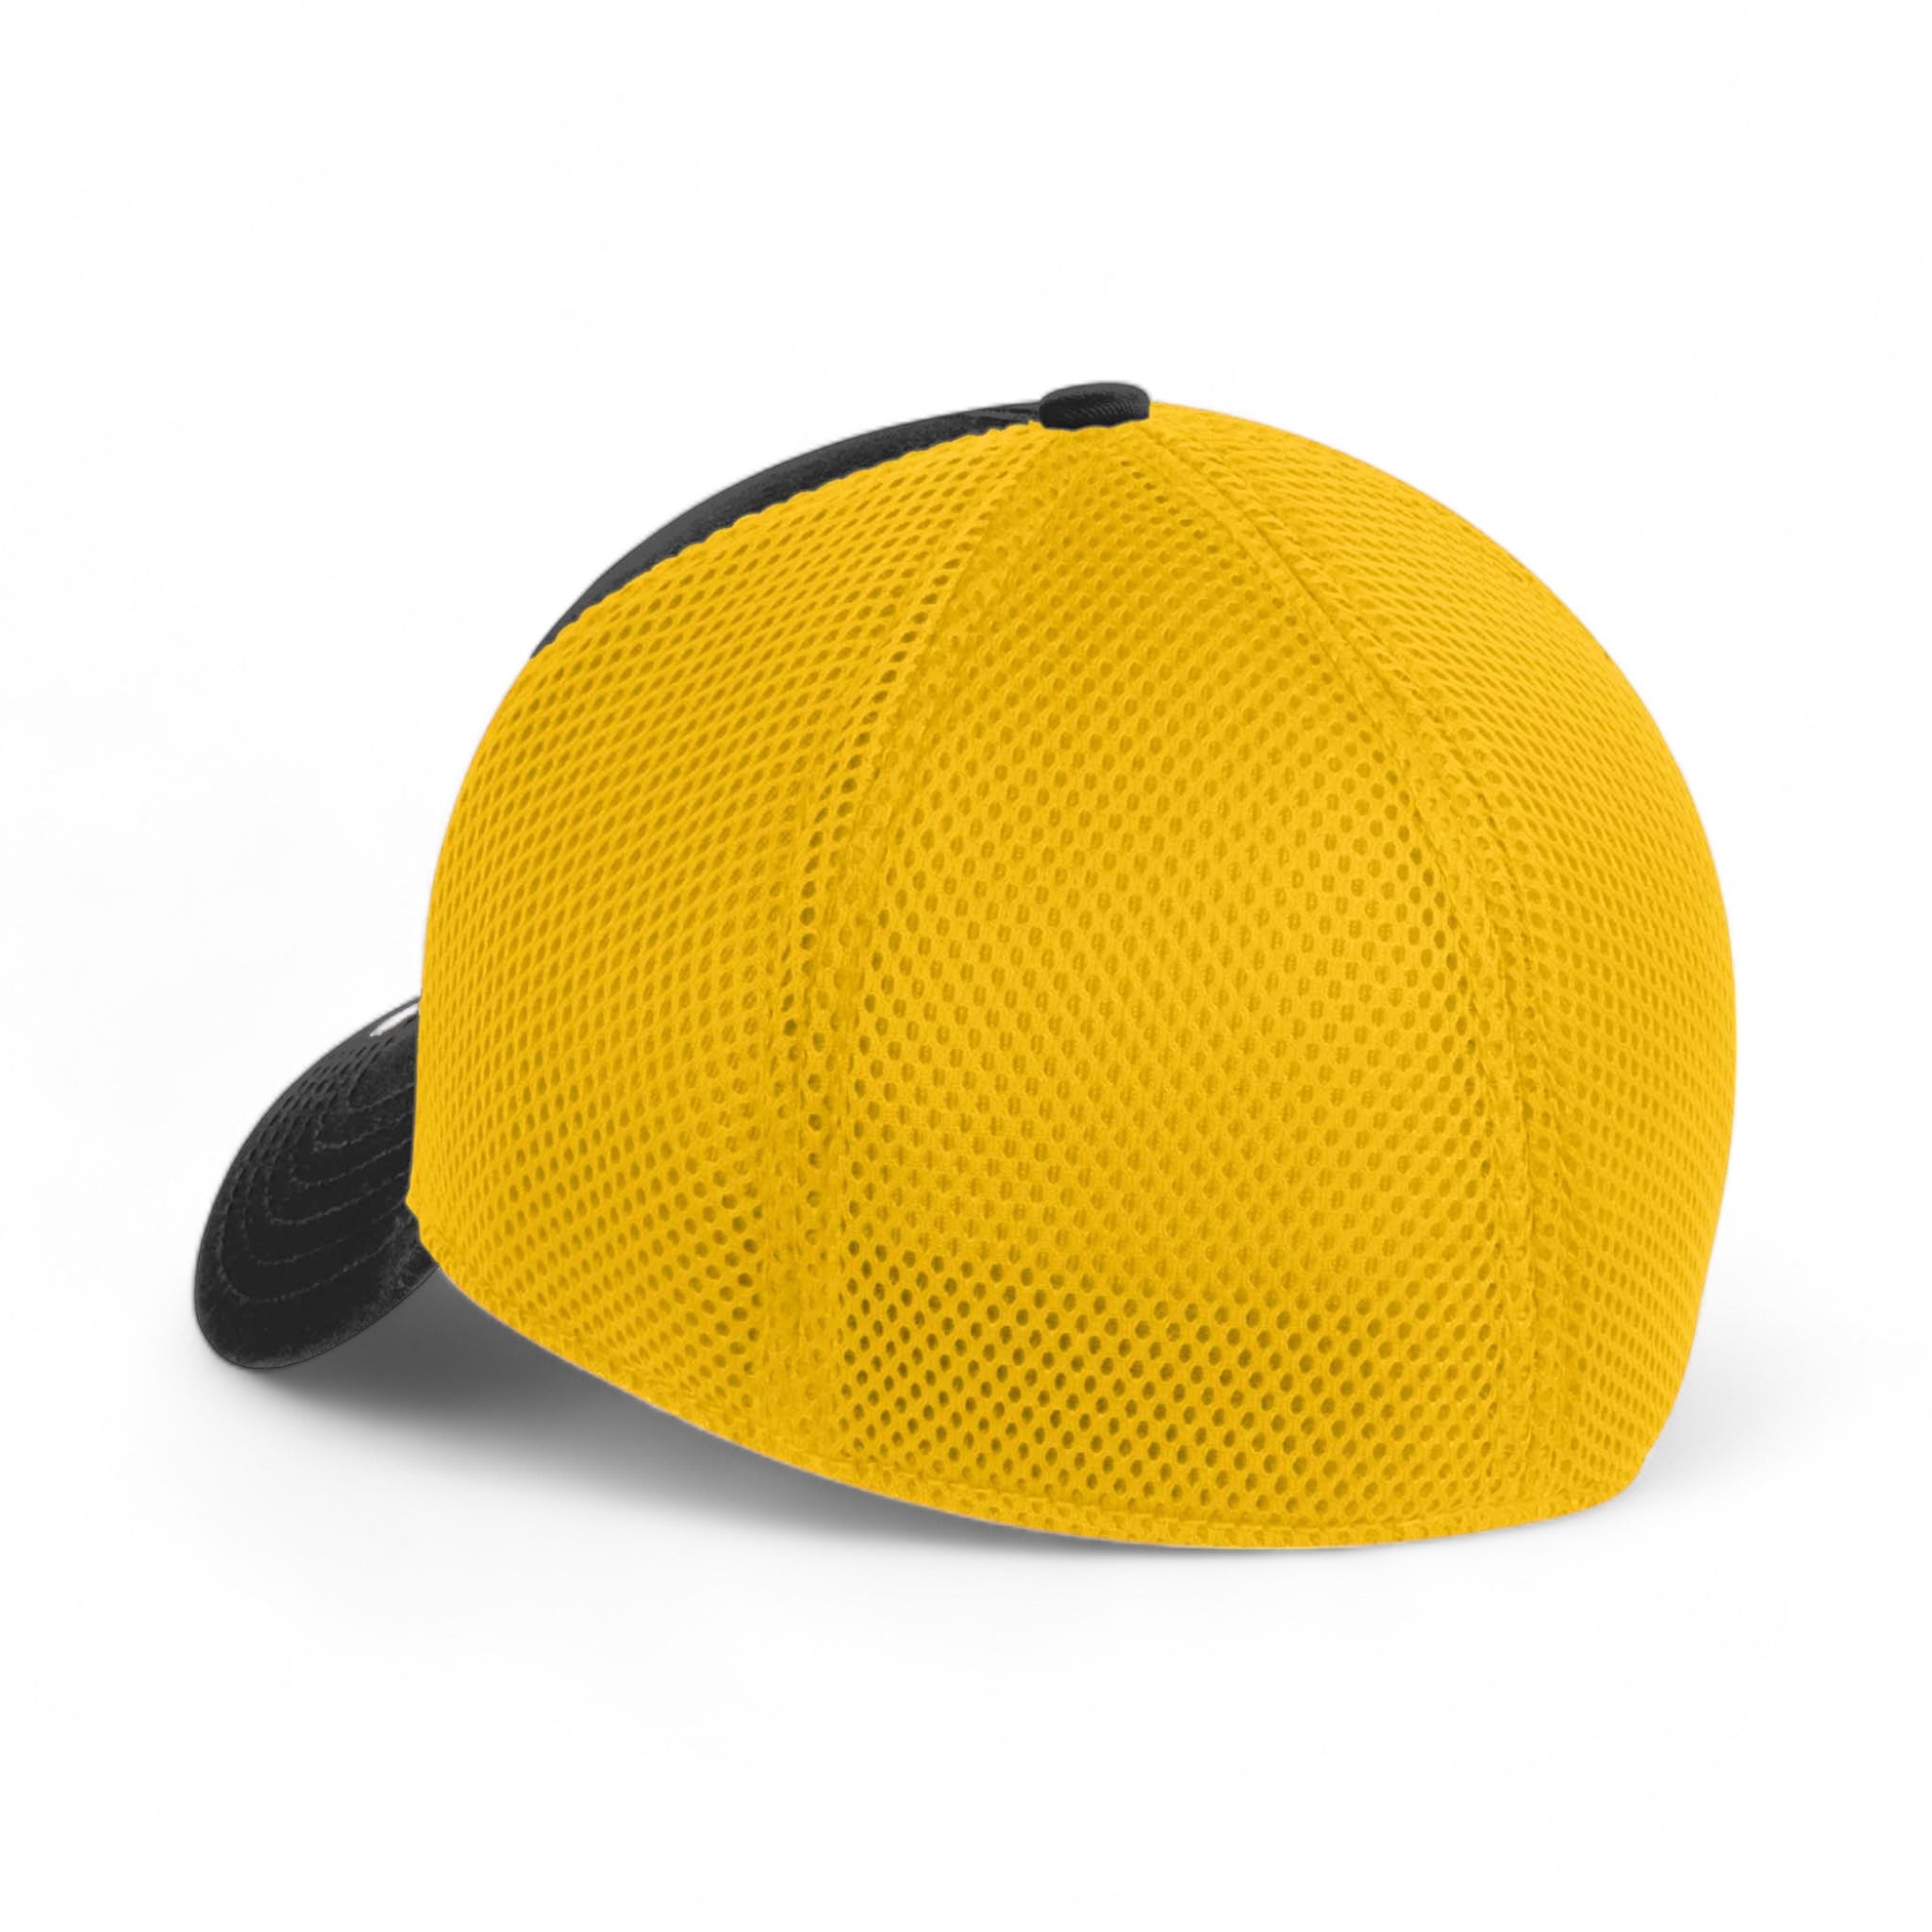 Back view of New Era NE1020 custom hat in black and gold